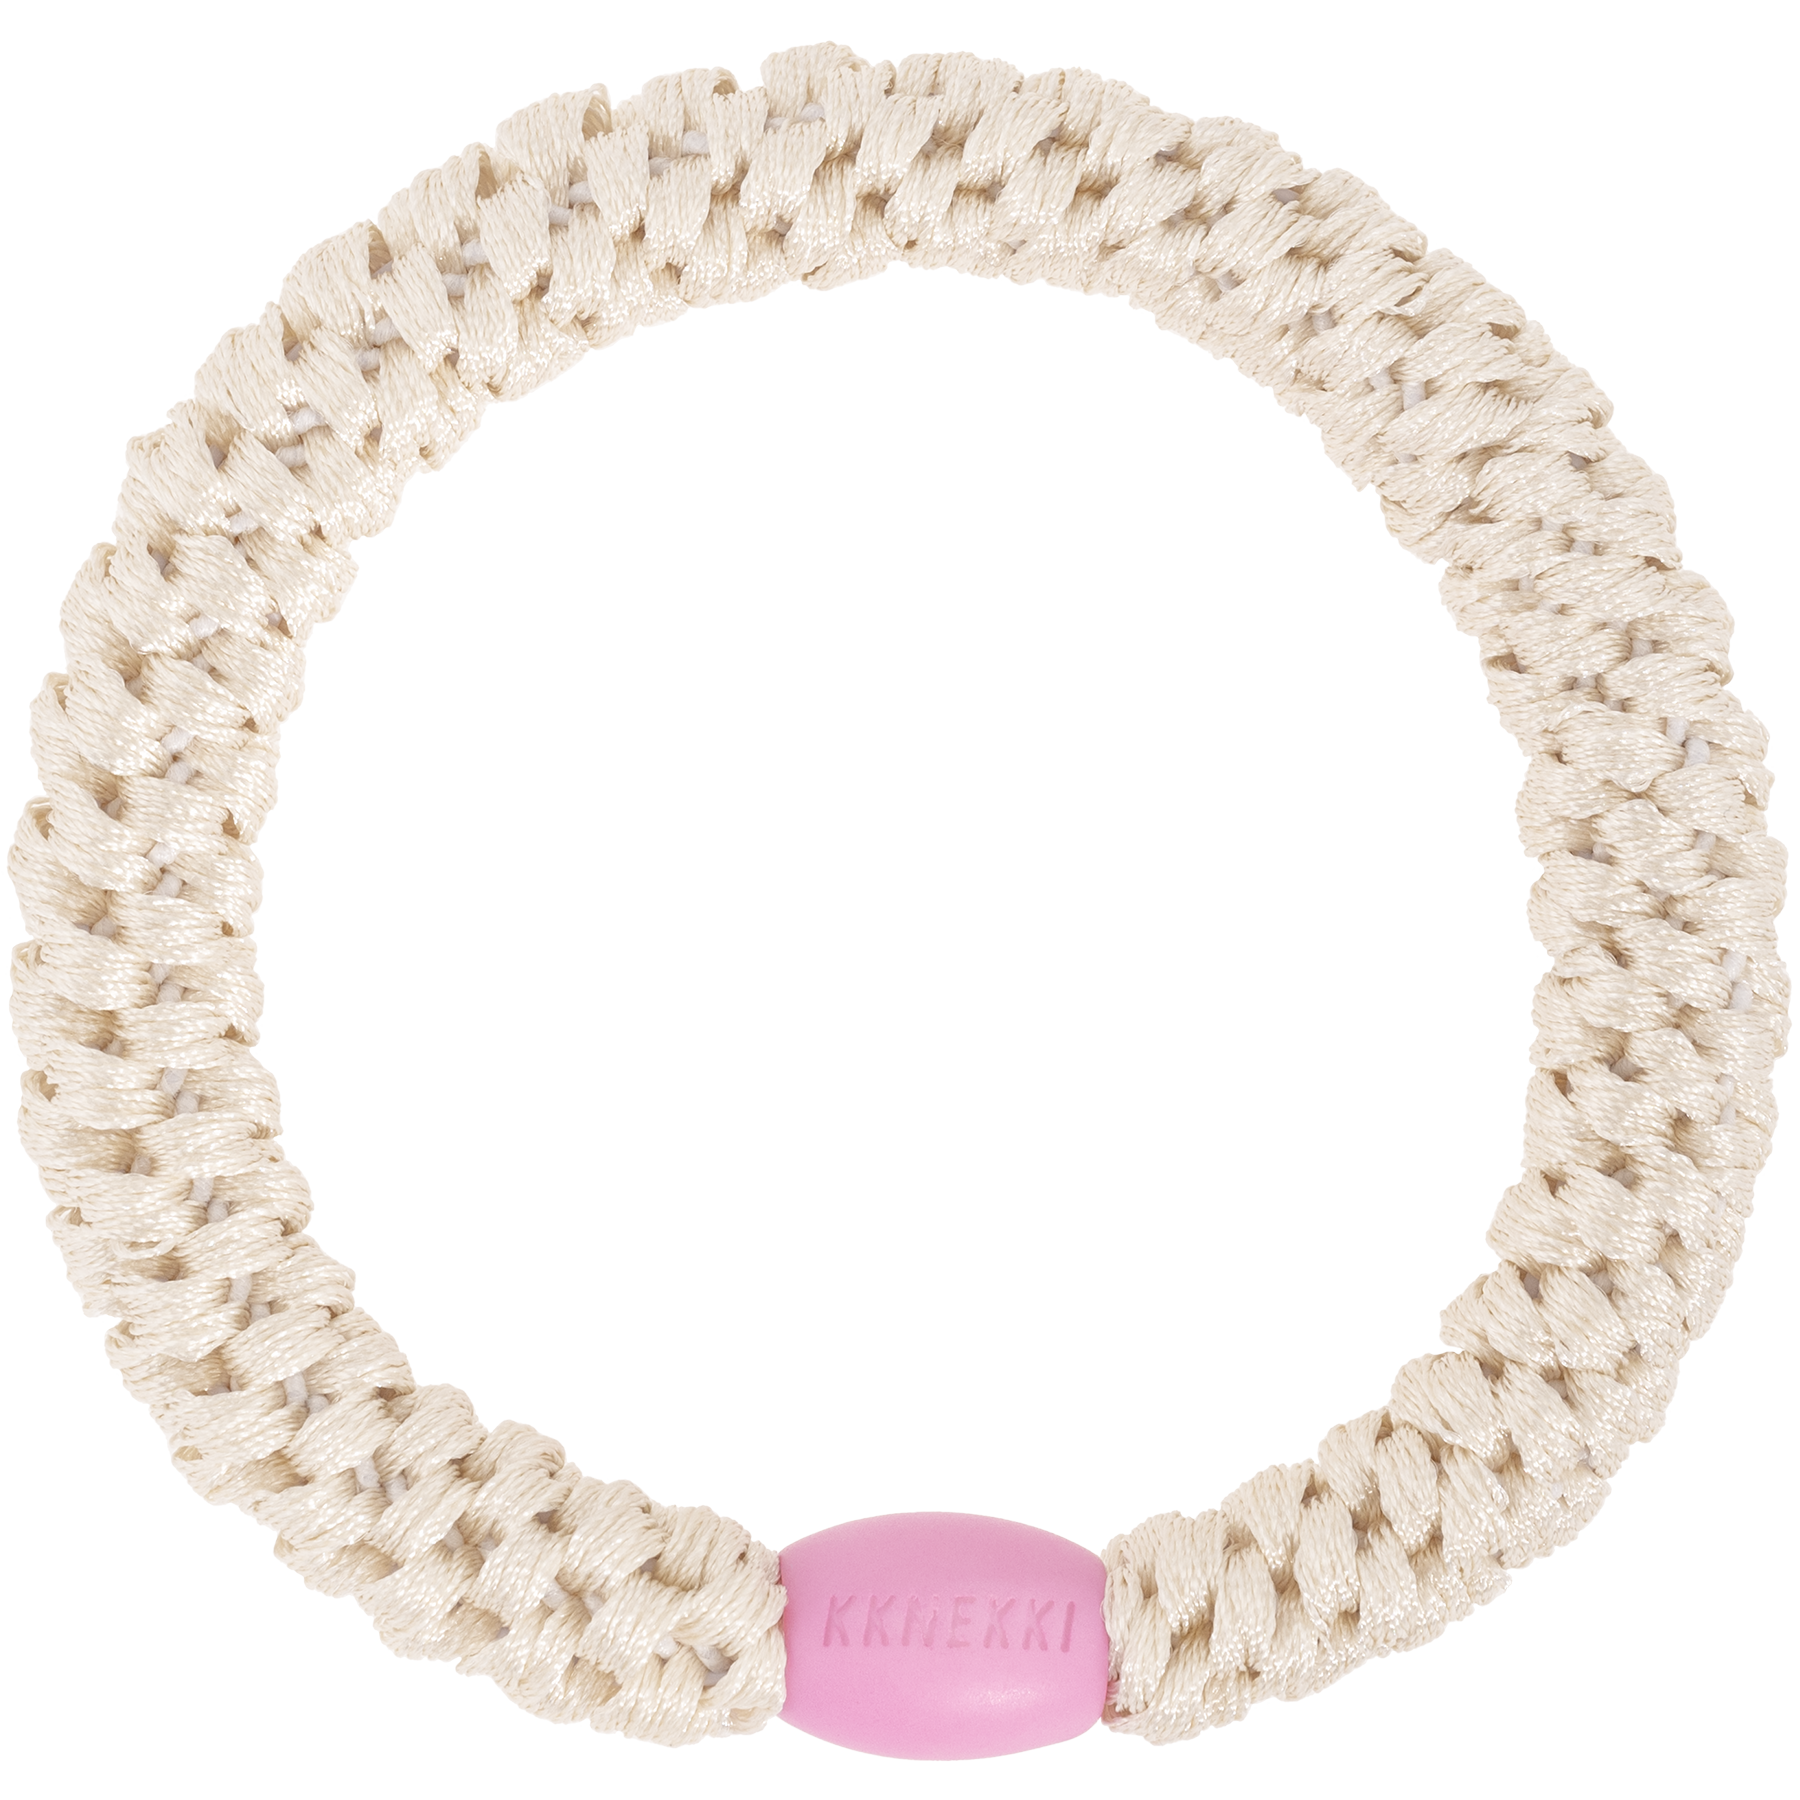 Image of Kknekki Ivory pink bead  from Kknekki original hair ties